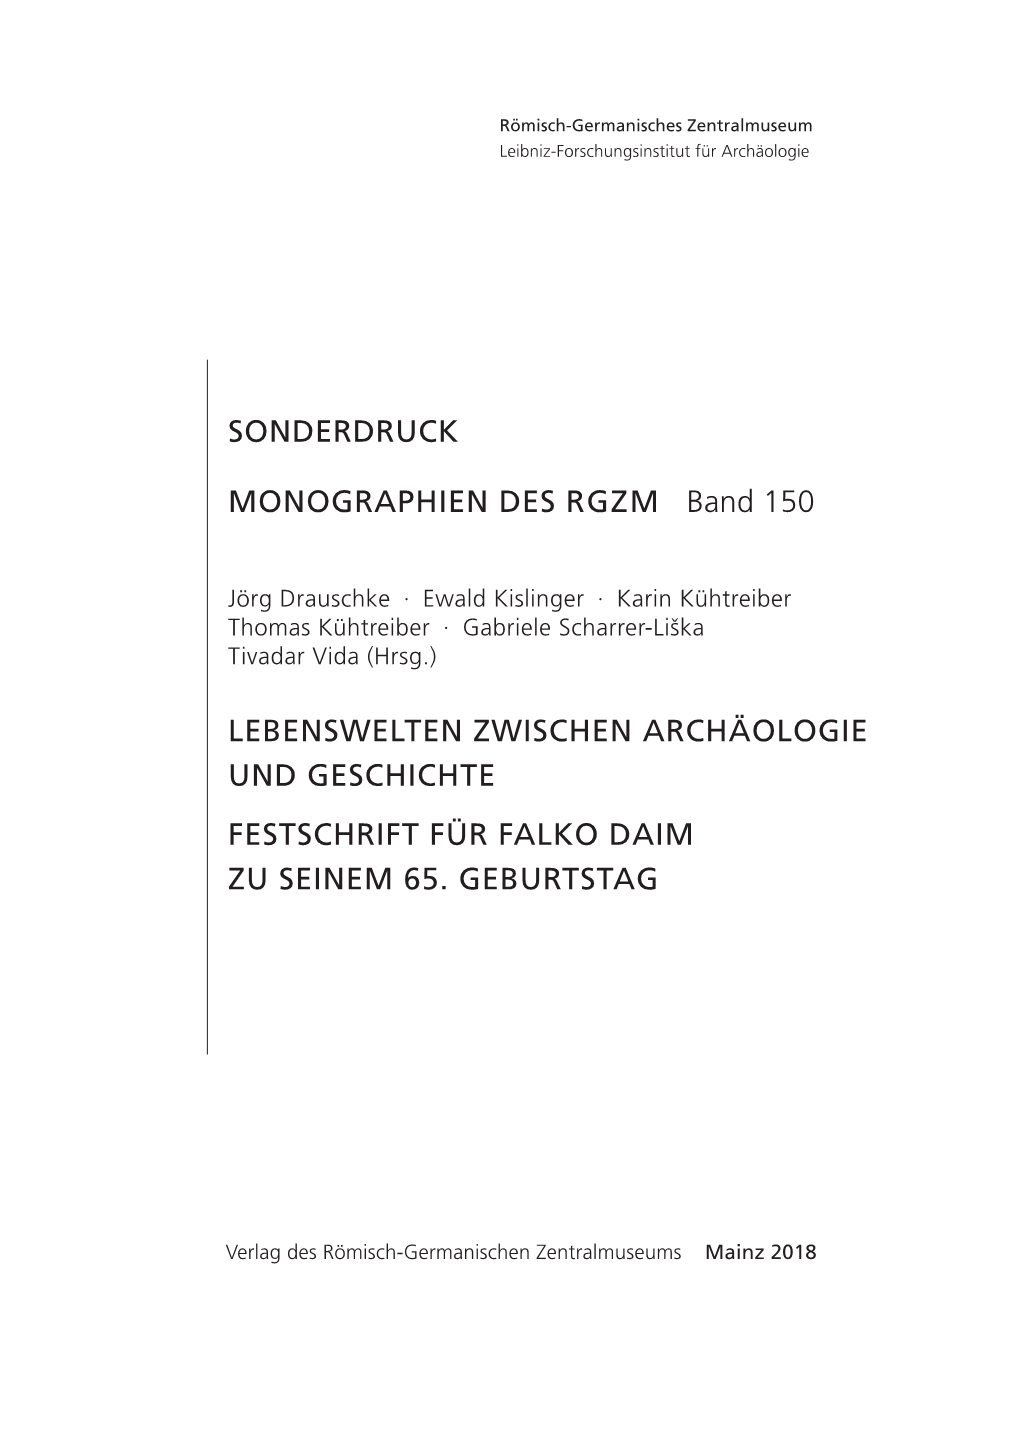 Monographien RGZM 150 (Mainz 2018)